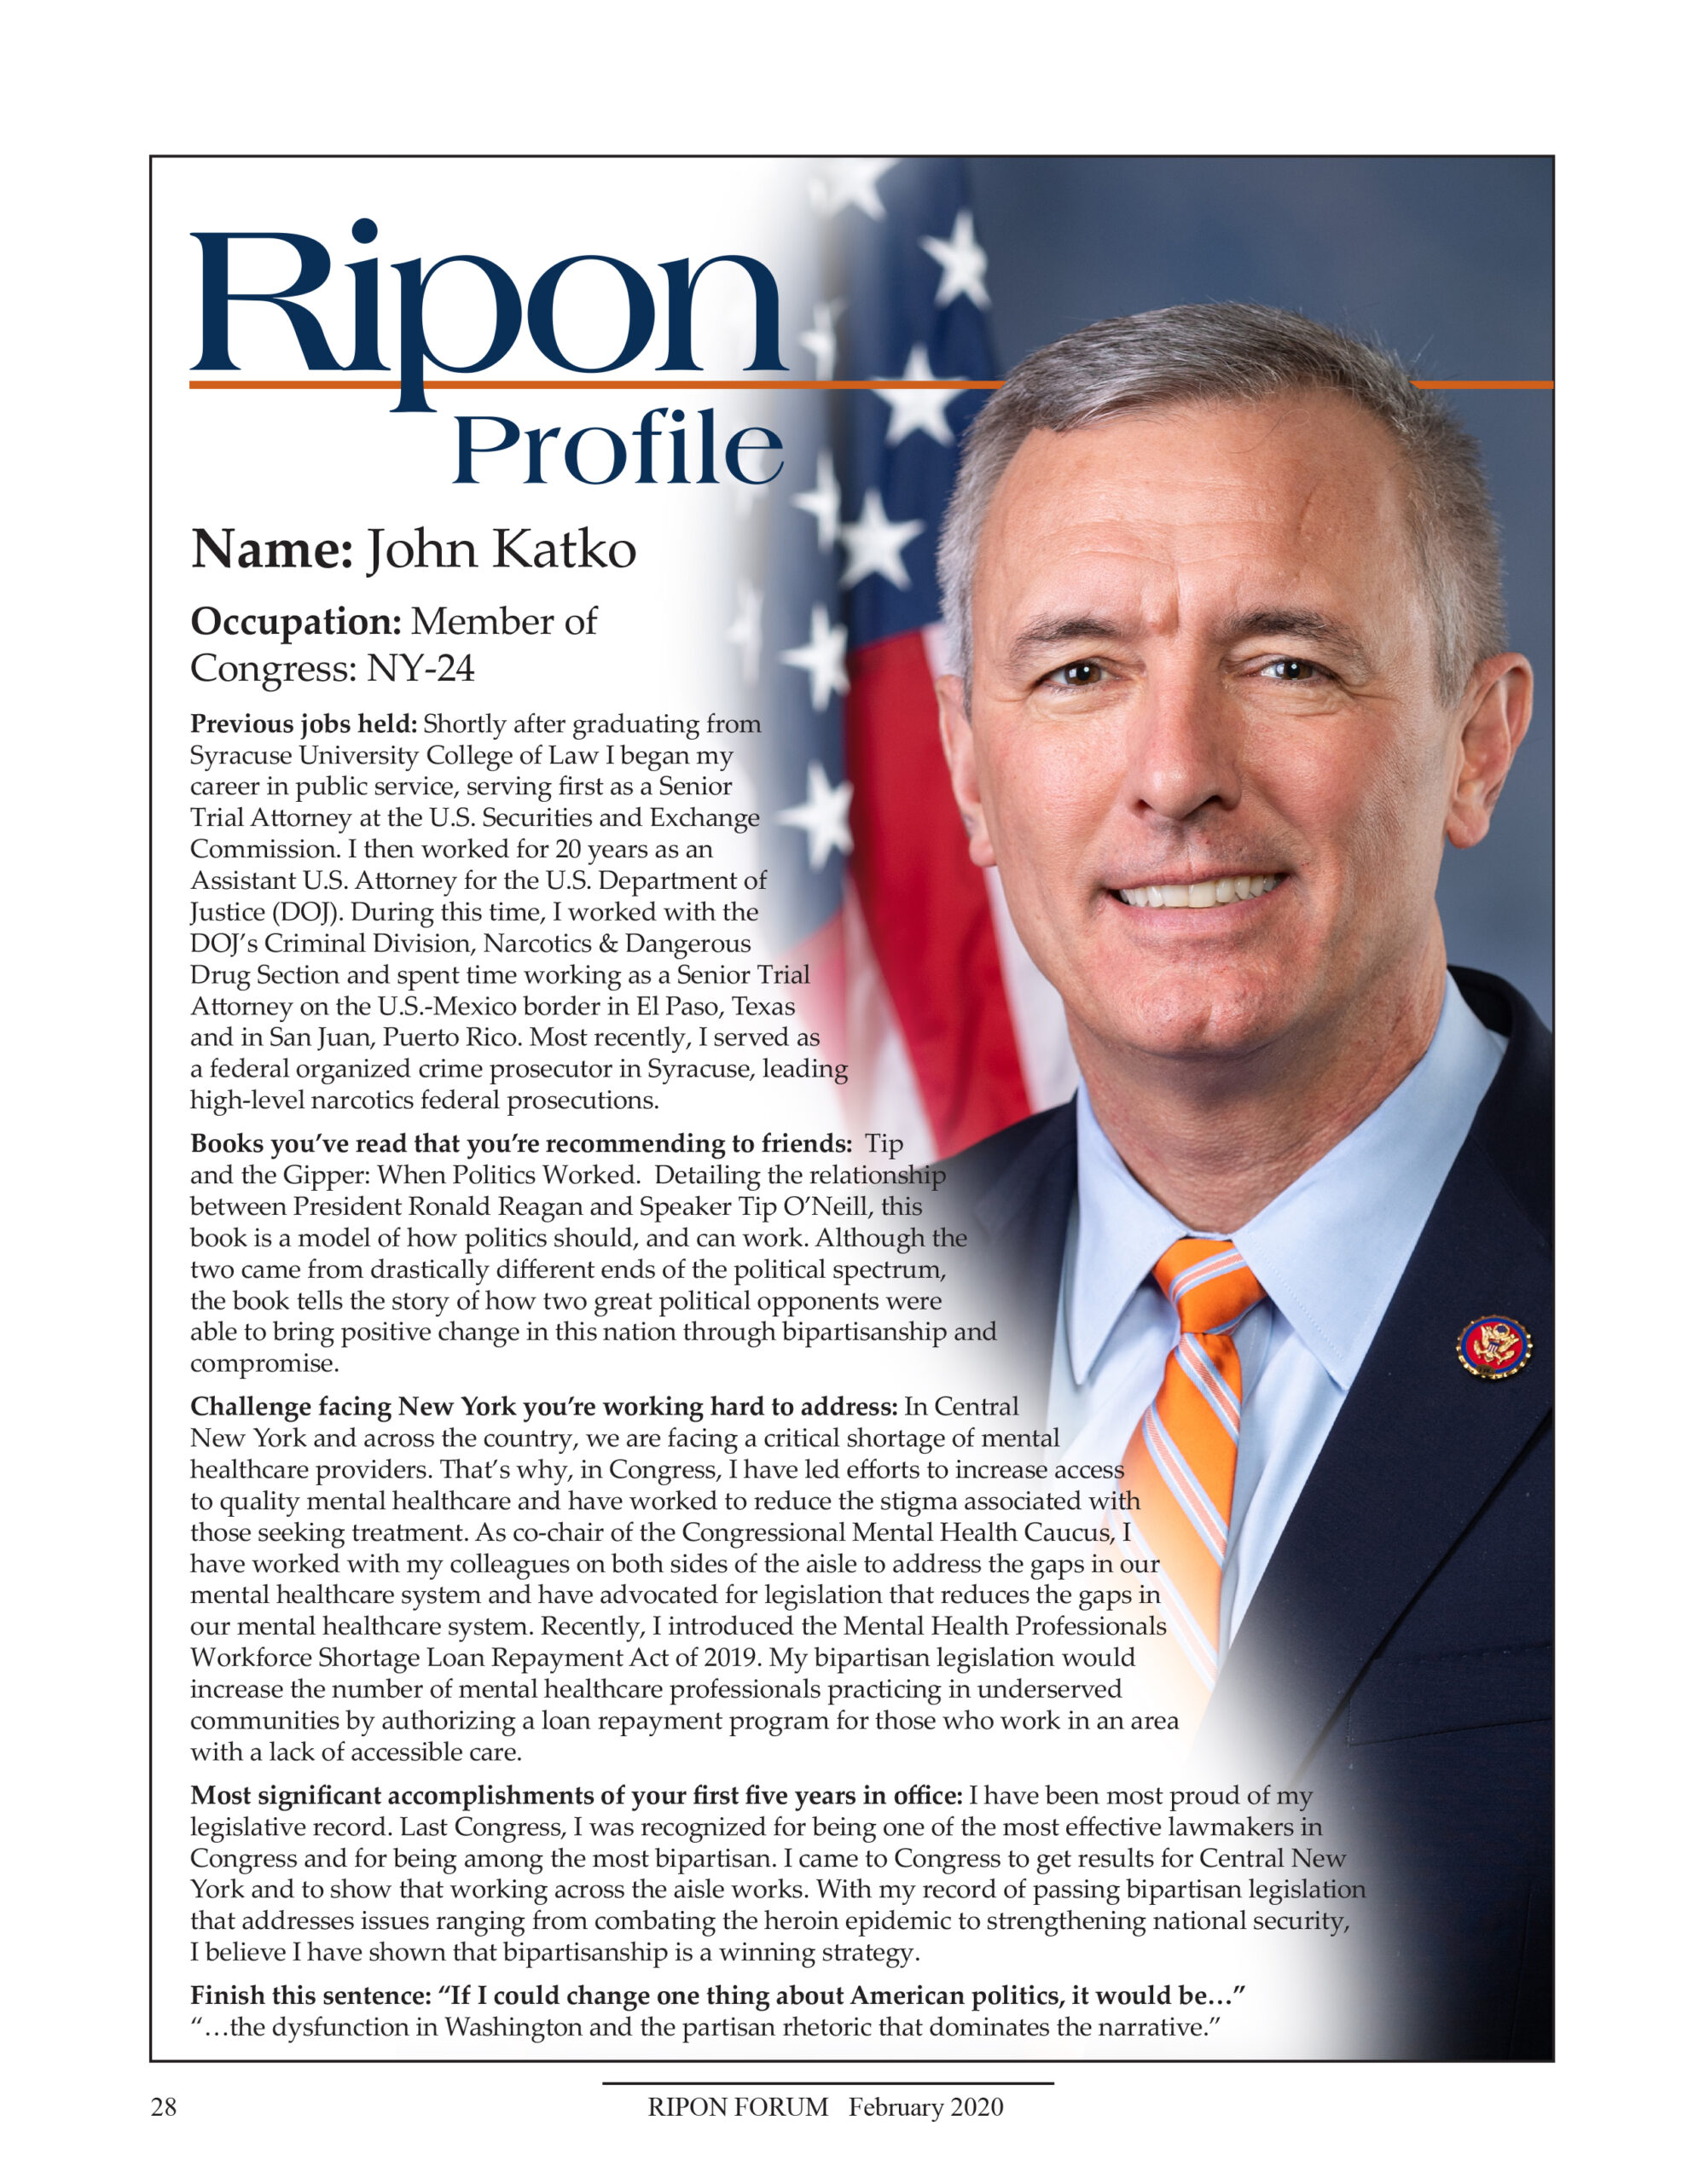 Ripon Profile of John Katko